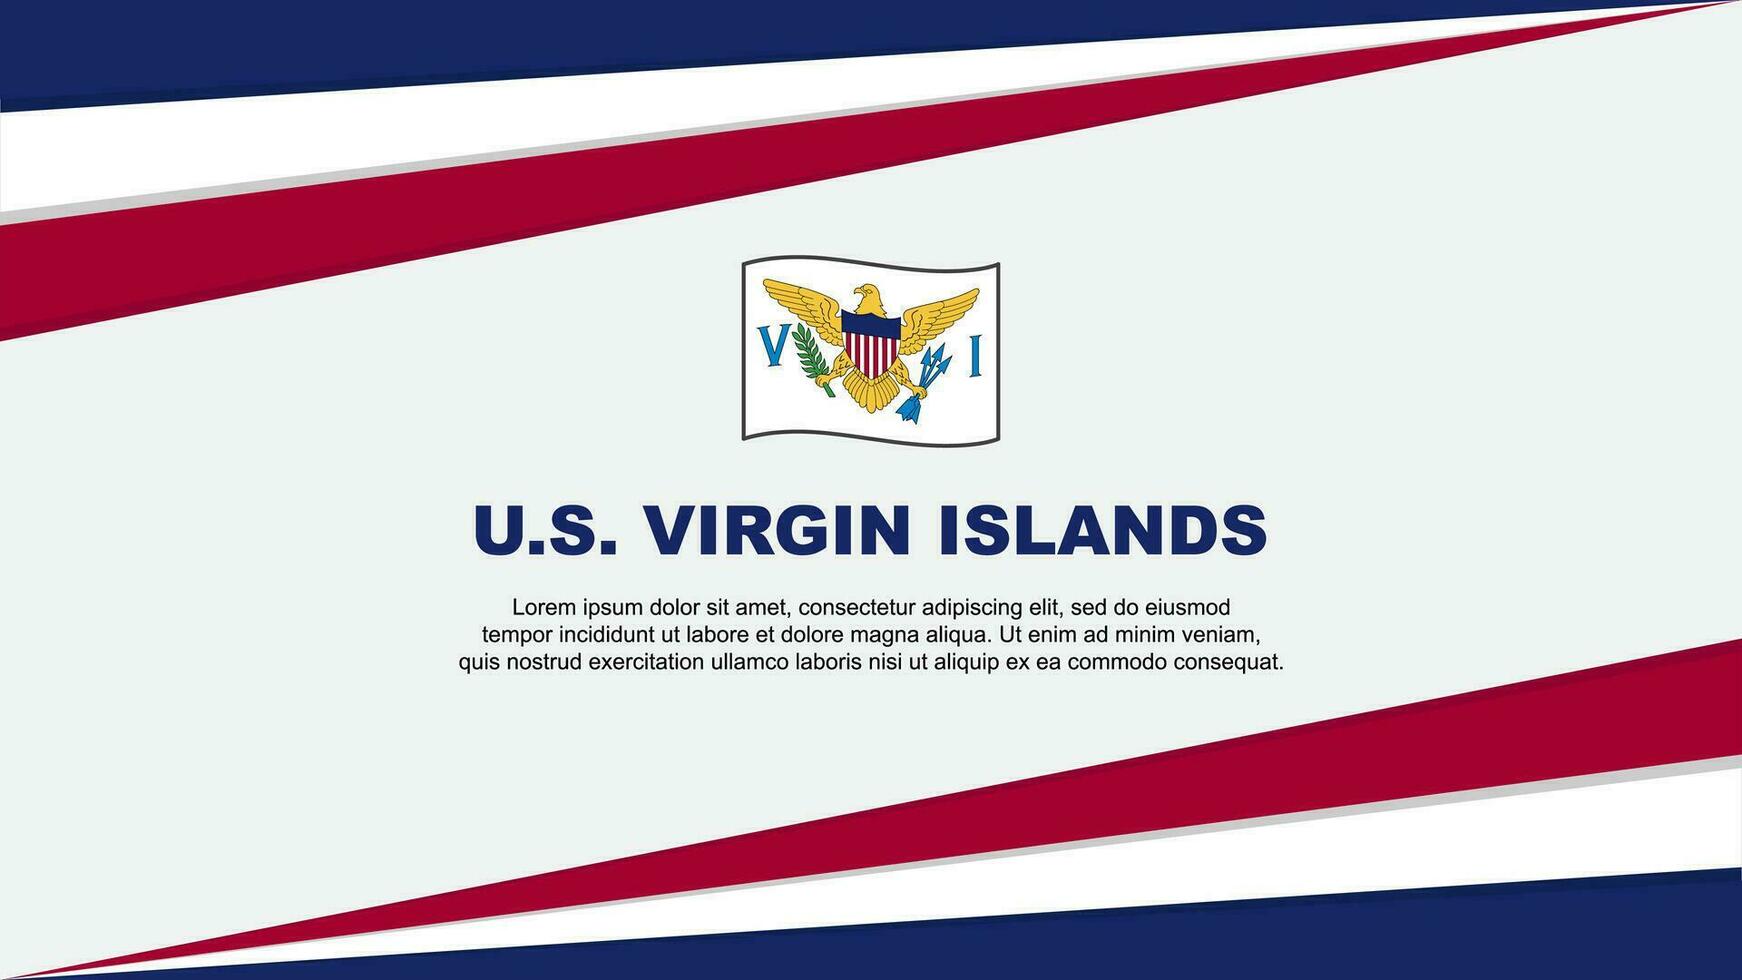 U.S. Virgin Islands Flag Abstract Background Design Template. U.S. Virgin Islands Independence Day Banner Cartoon Vector Illustration. U.S. Virgin Islands Design